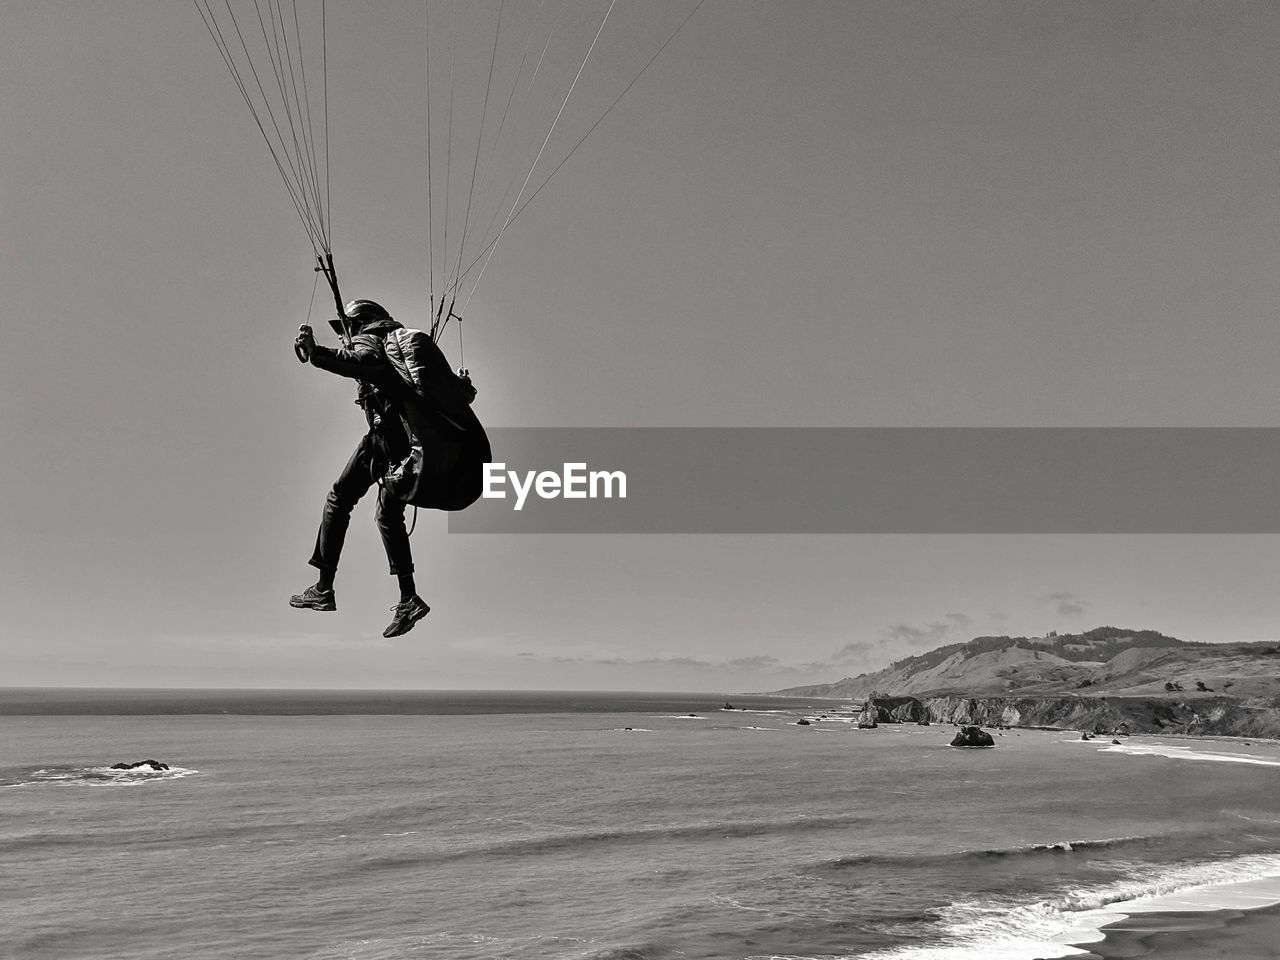 Man paragliding over the ocean against cliffs.